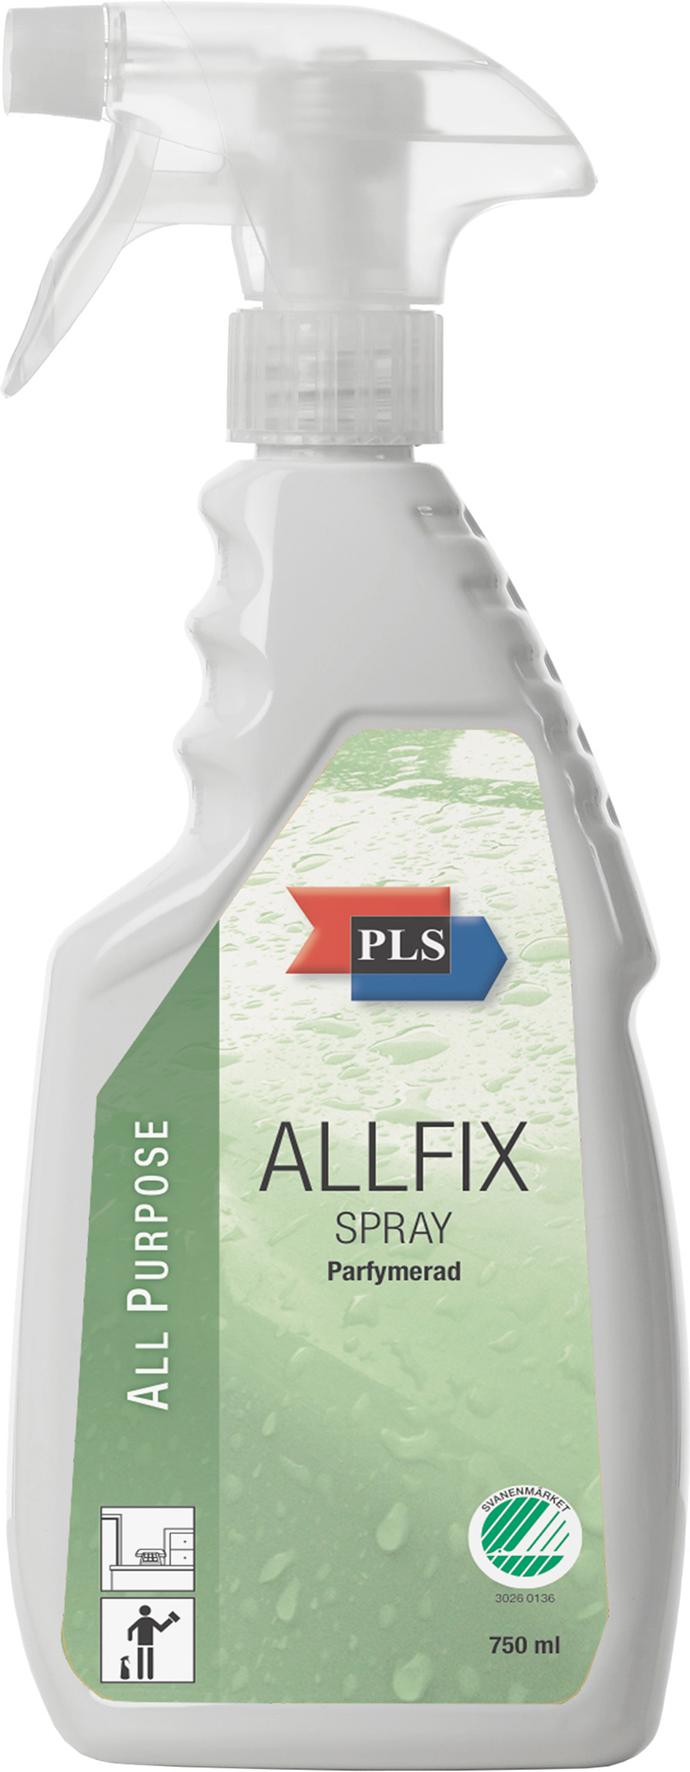 PLS Allfix spray 750ml